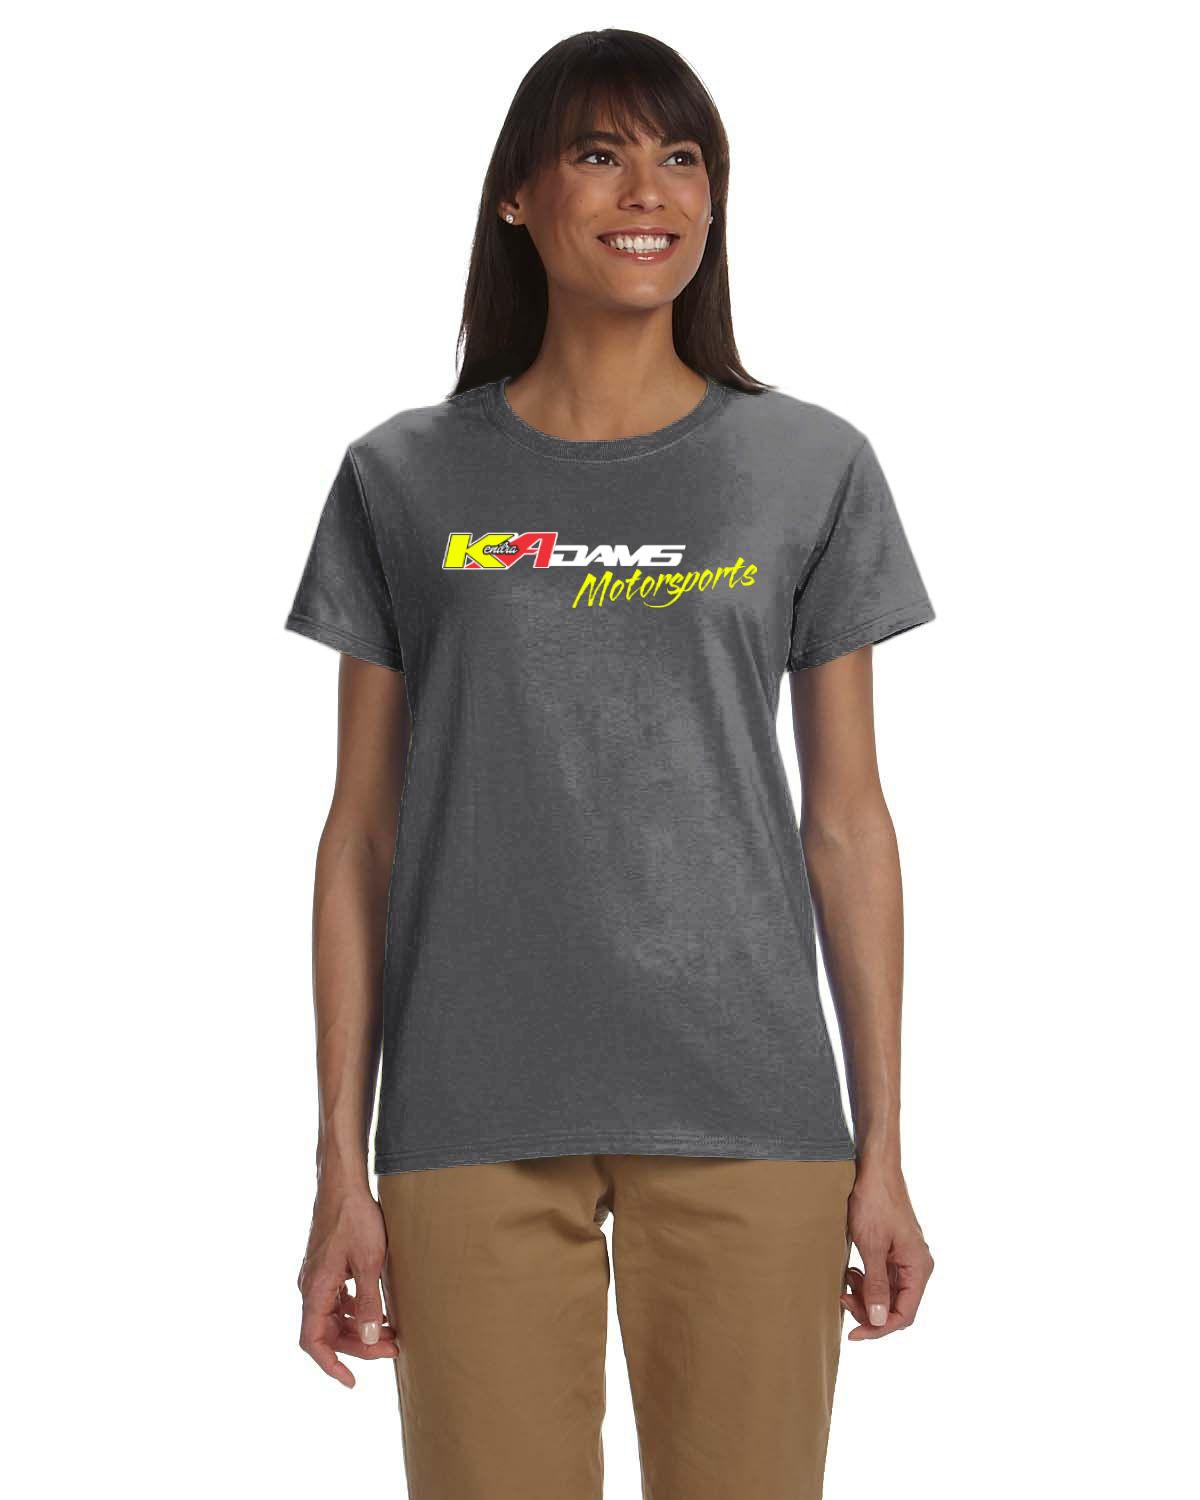 Kendra Adams Motorsports Women's Tshirt